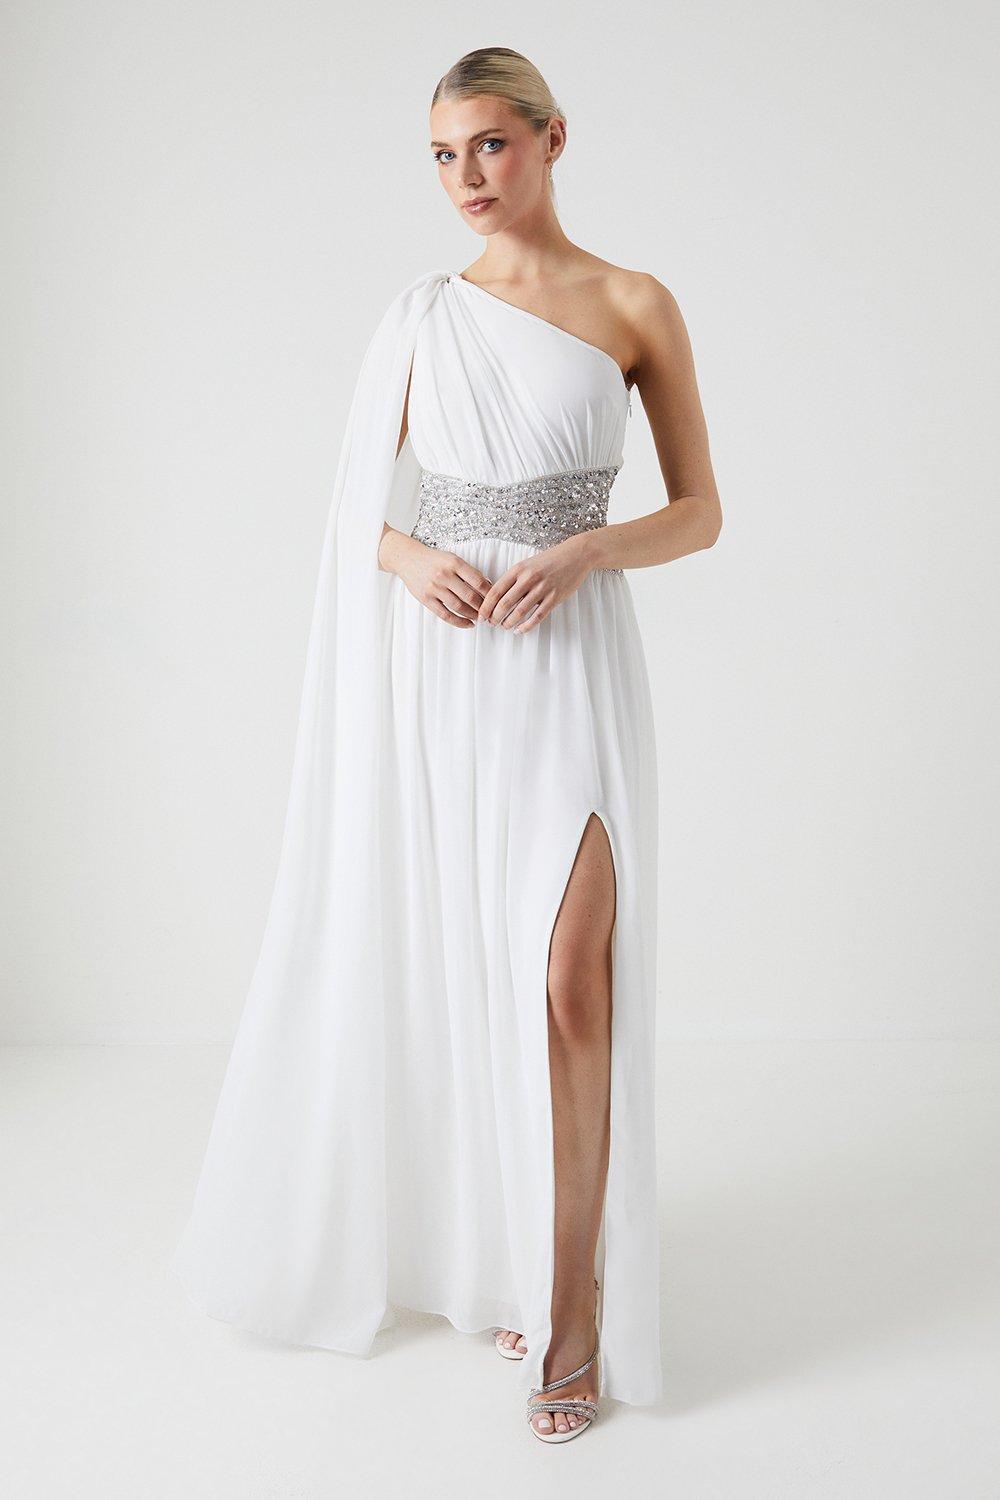 Chiffon Cape Sleeve Wedding Dress With Beaded Waistband - Ivory